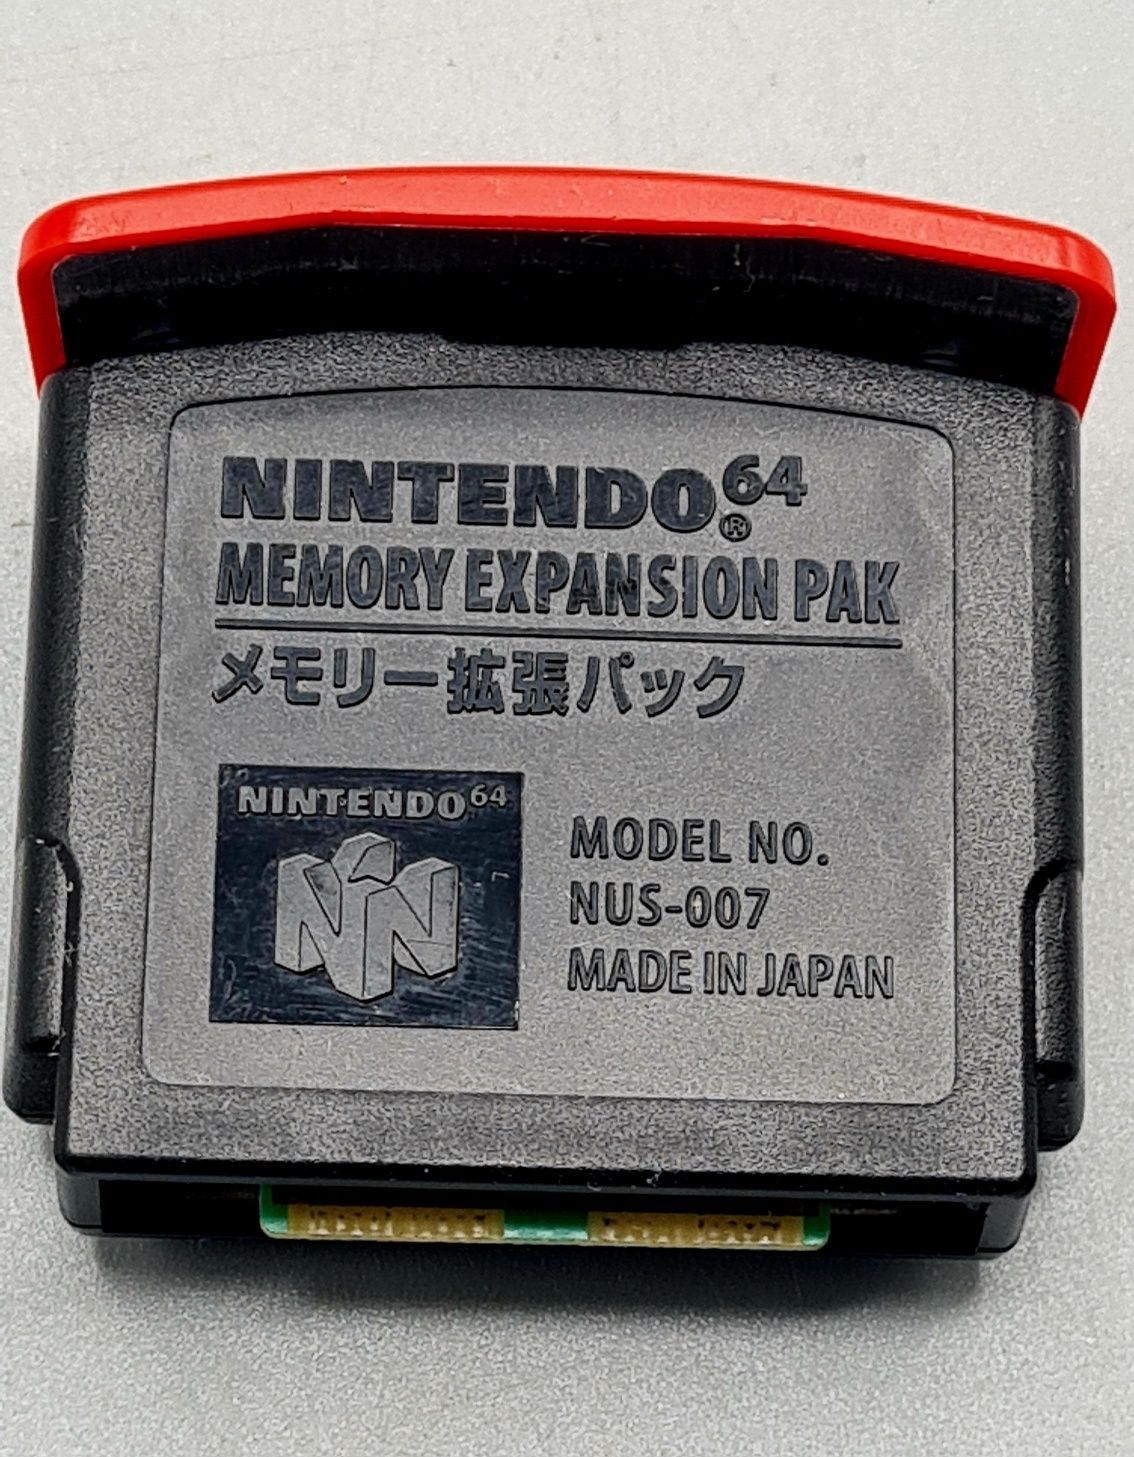 memory expansion pak nintendo 64 n64 nus 007 made in japan